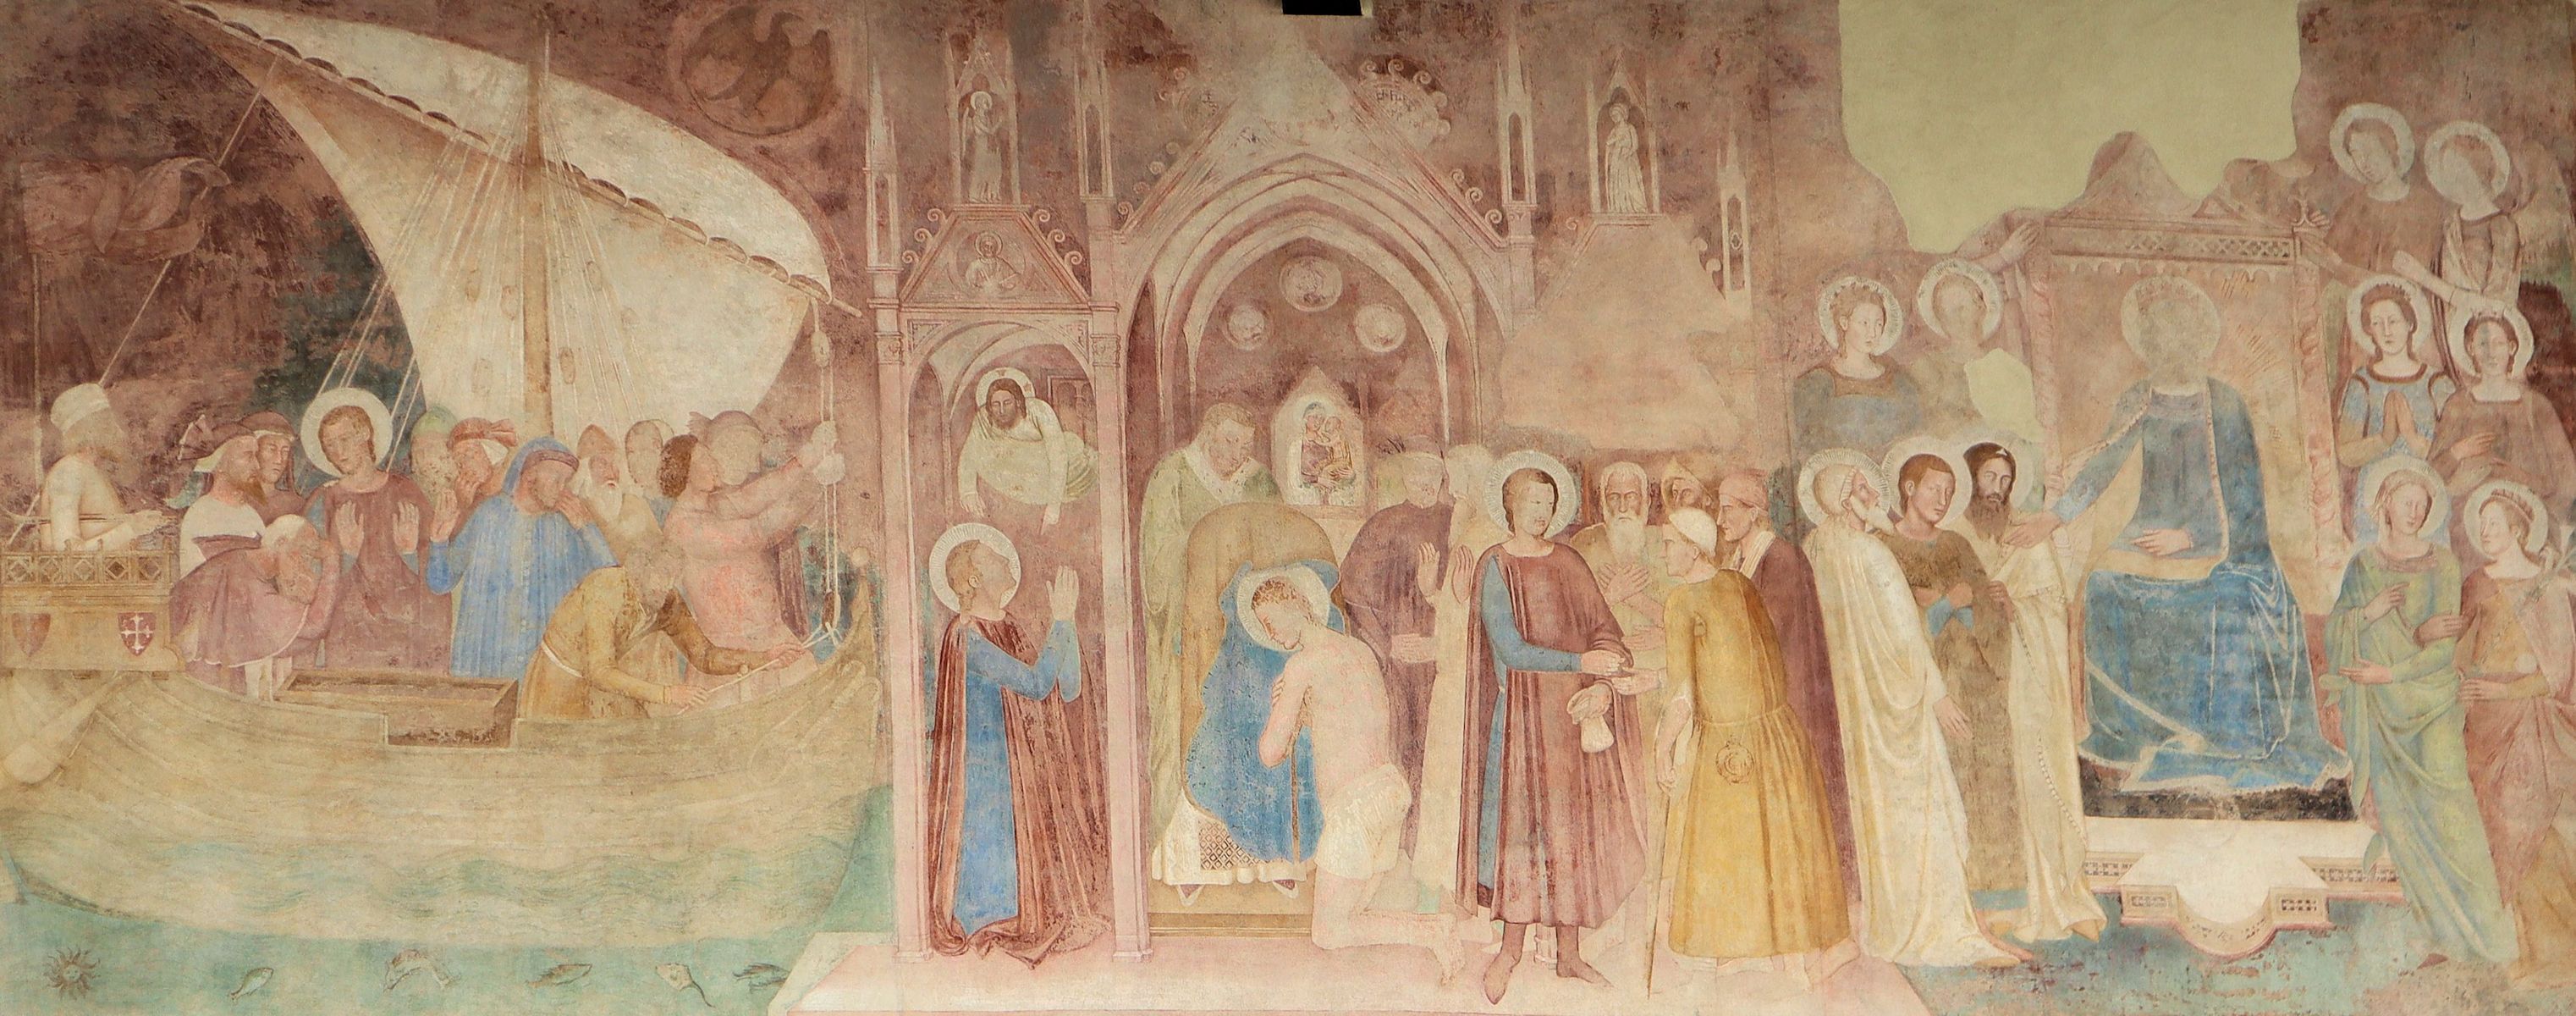 Andrea da Firenze (aktiv 1343 - 1377): Szenen aus dem Leben von Rainer, Fresko im Campo Santo in Pisa